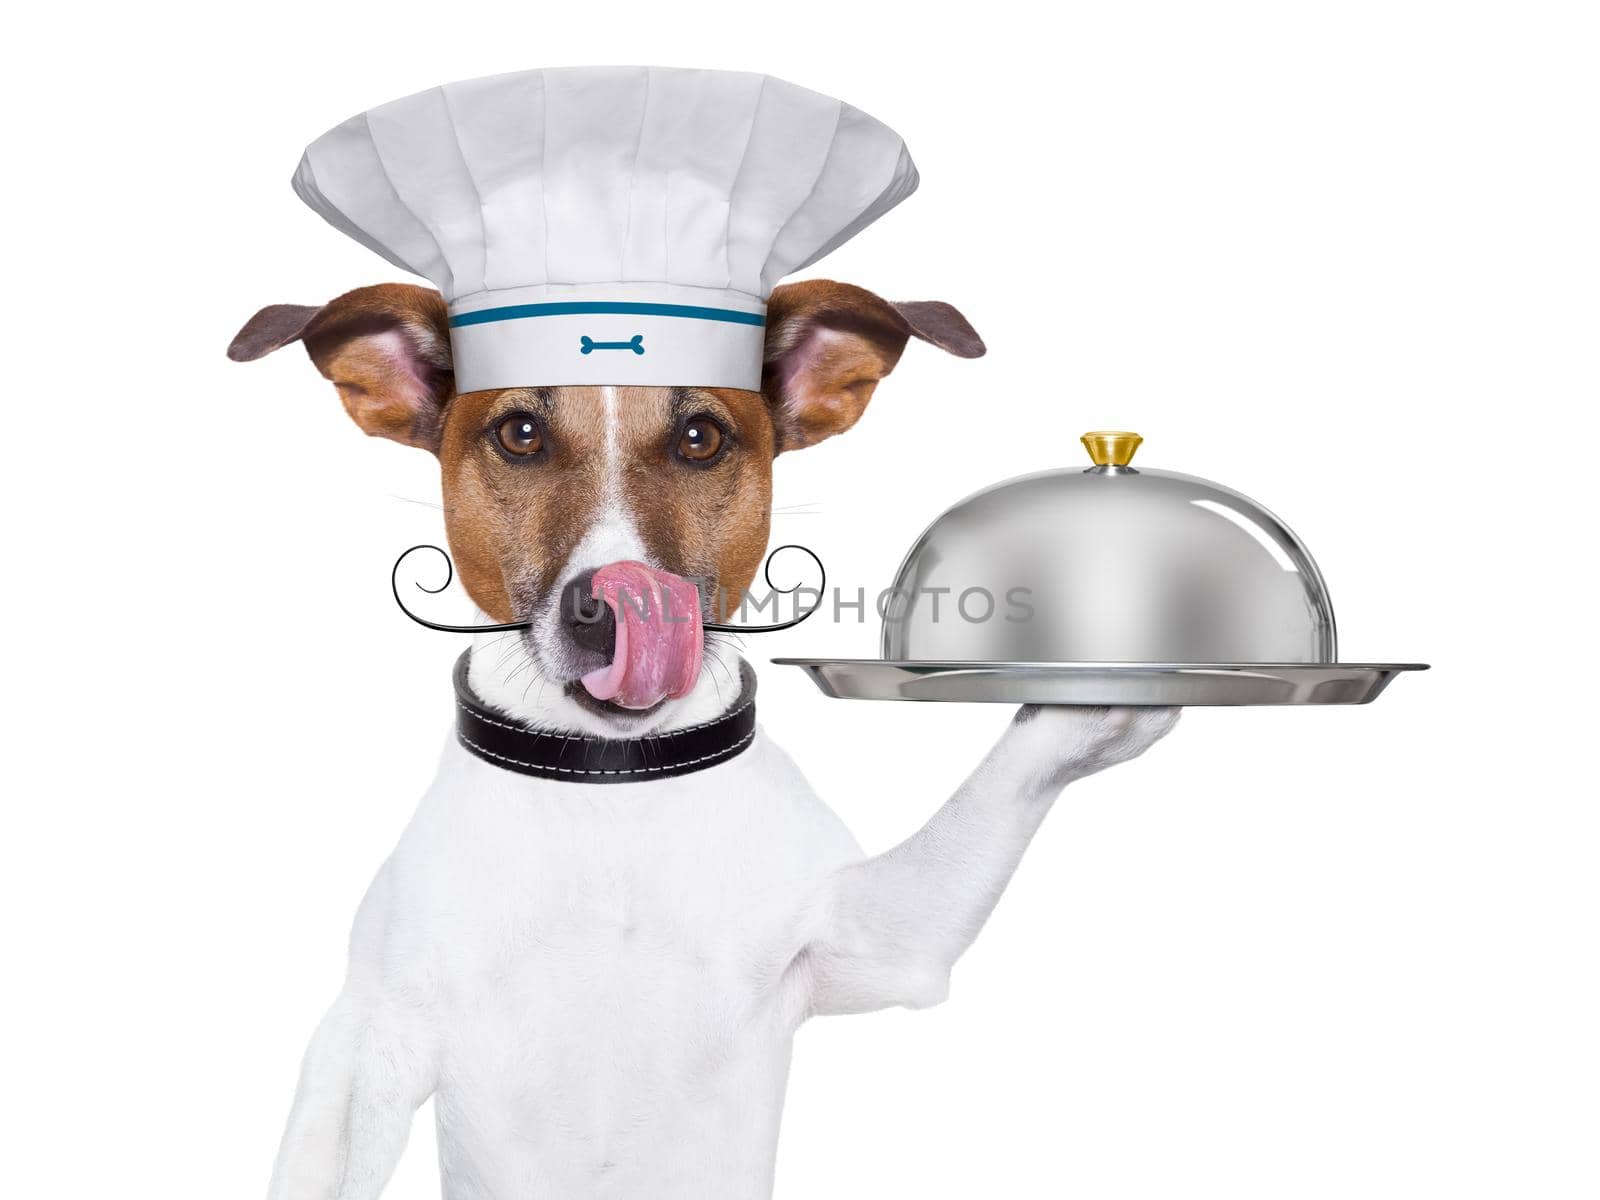 dog cook chef  by Brosch